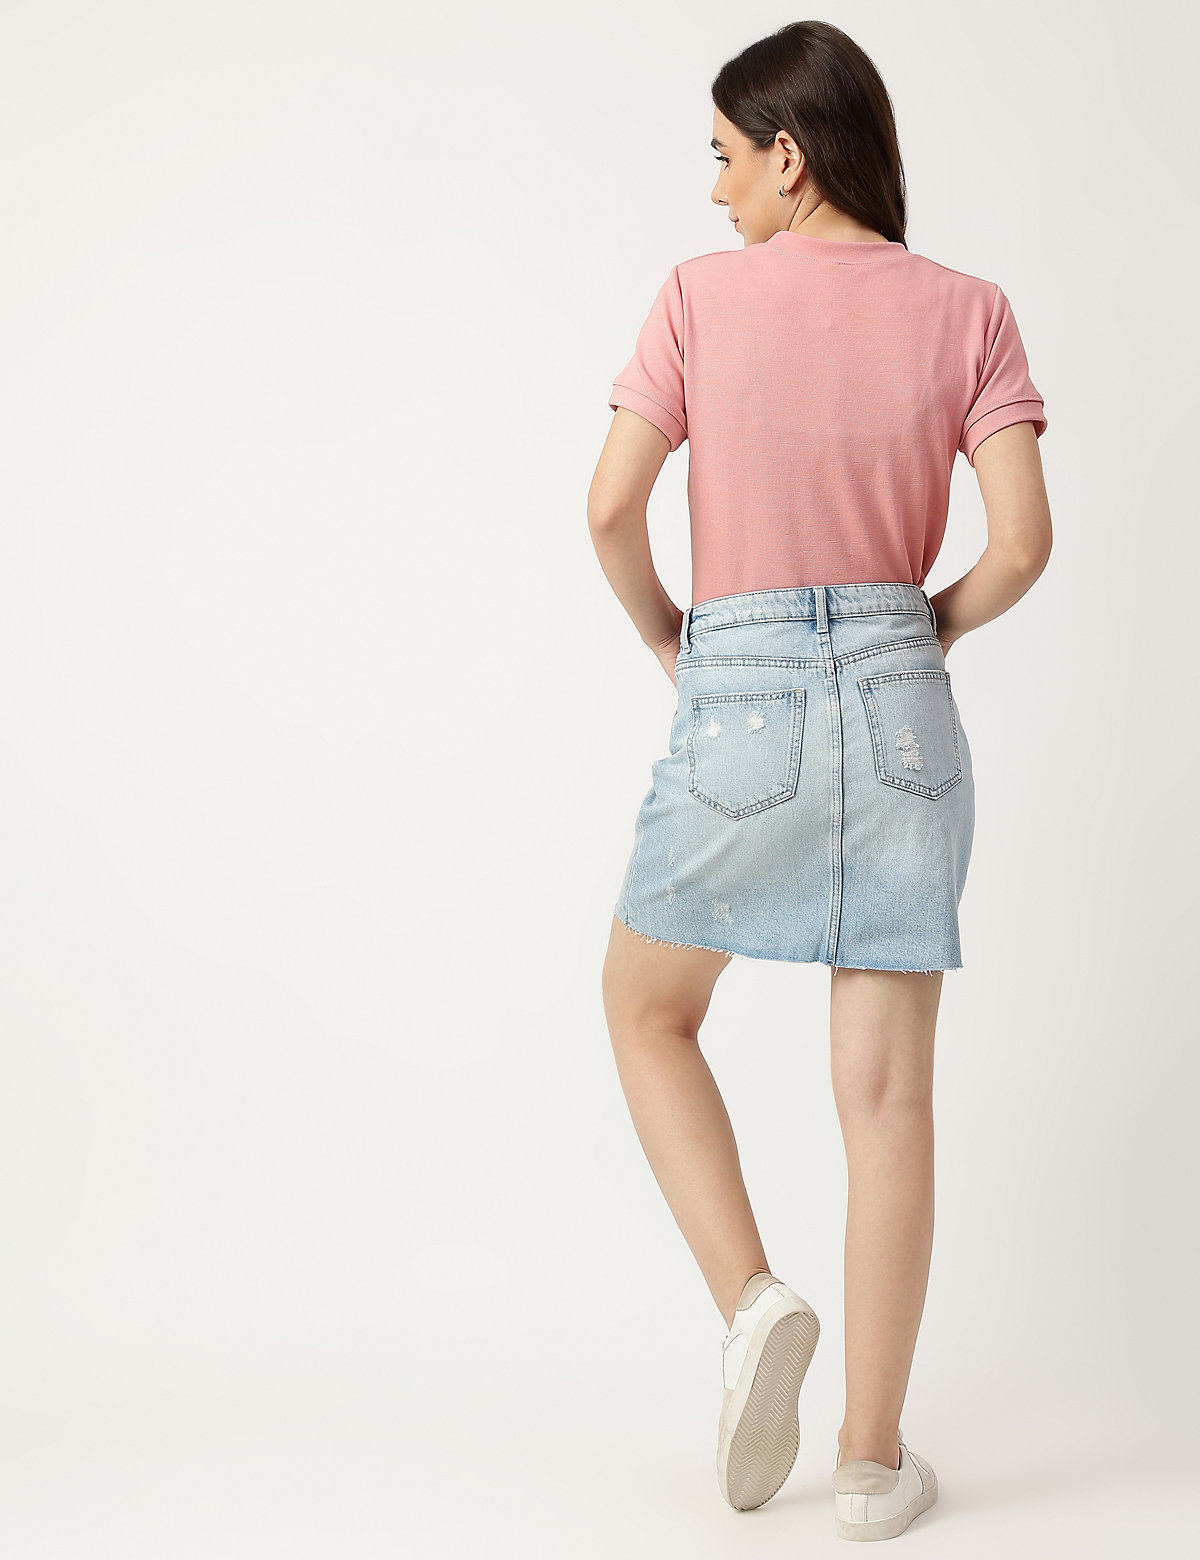 Pure Cotton Plain Regular Fit Denim Skirt